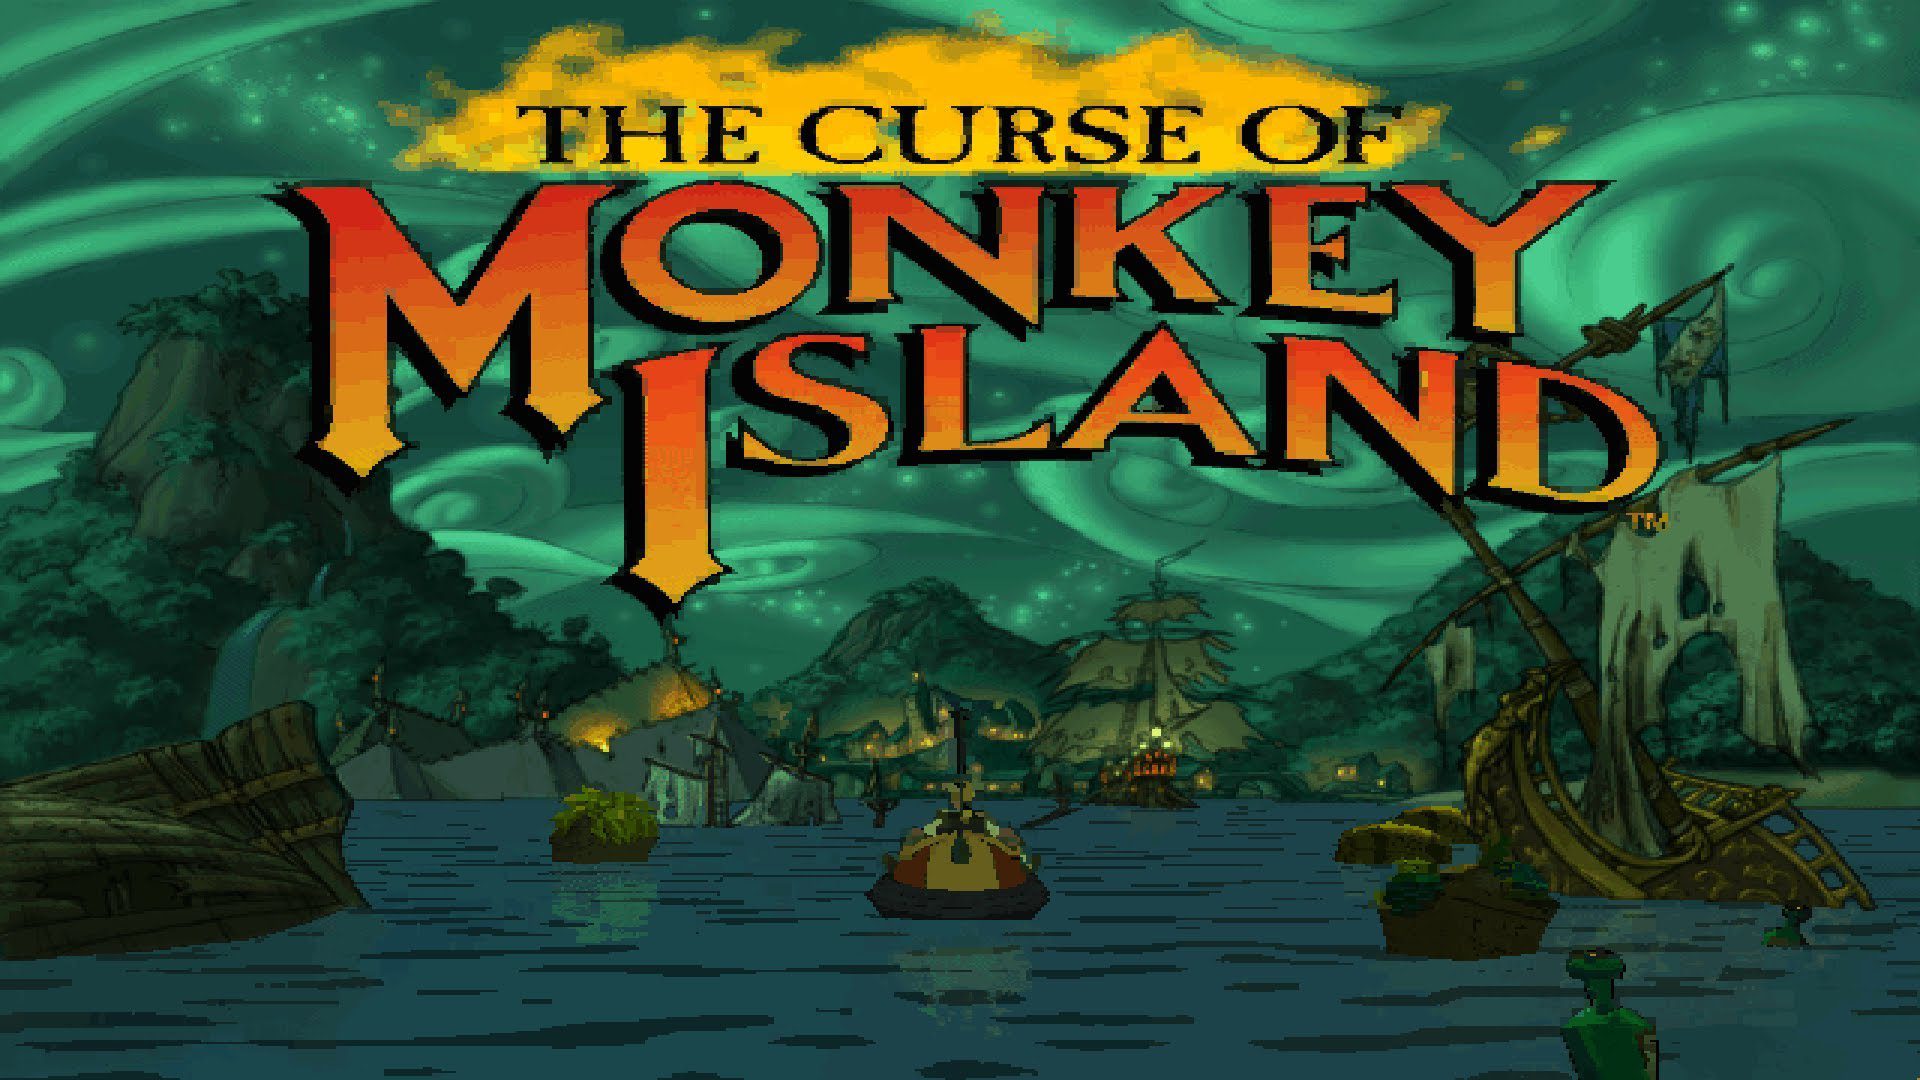 The Curse of Monkey Island returns on GOG.com